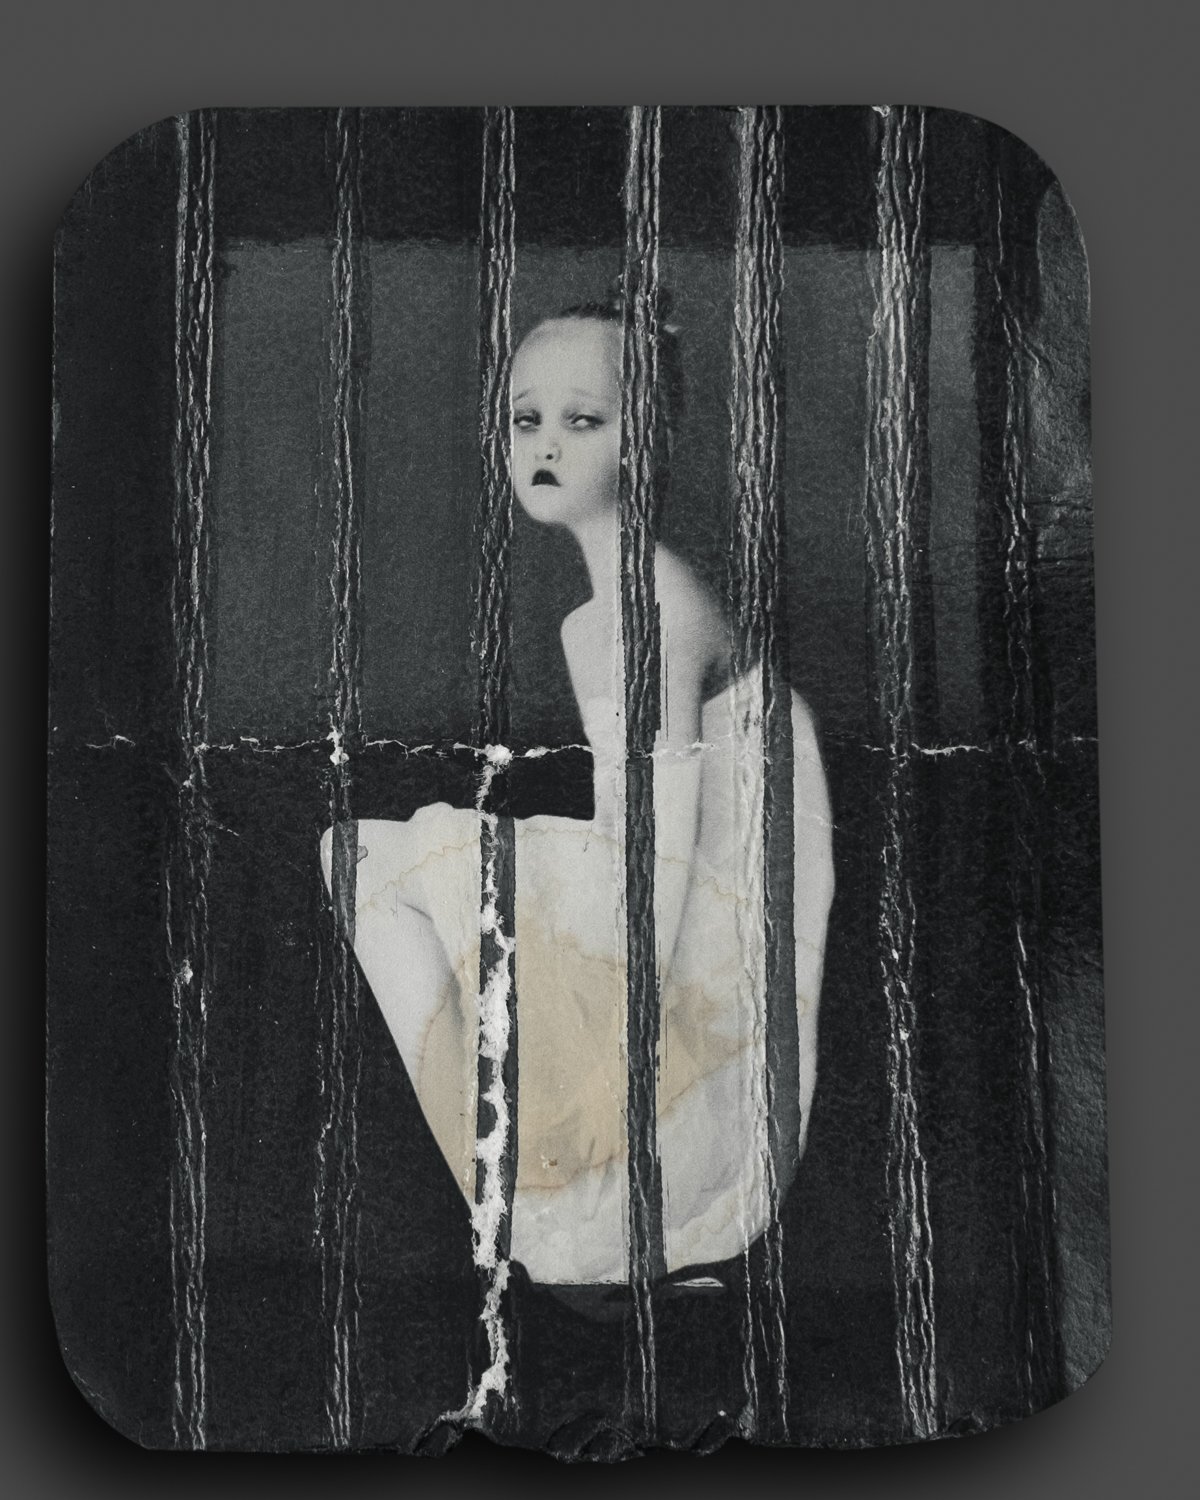 Kaatje Project - Broken Children - Corina Bouweriks - Art and Photography - Contemporary - 1125 - WEB.jpg